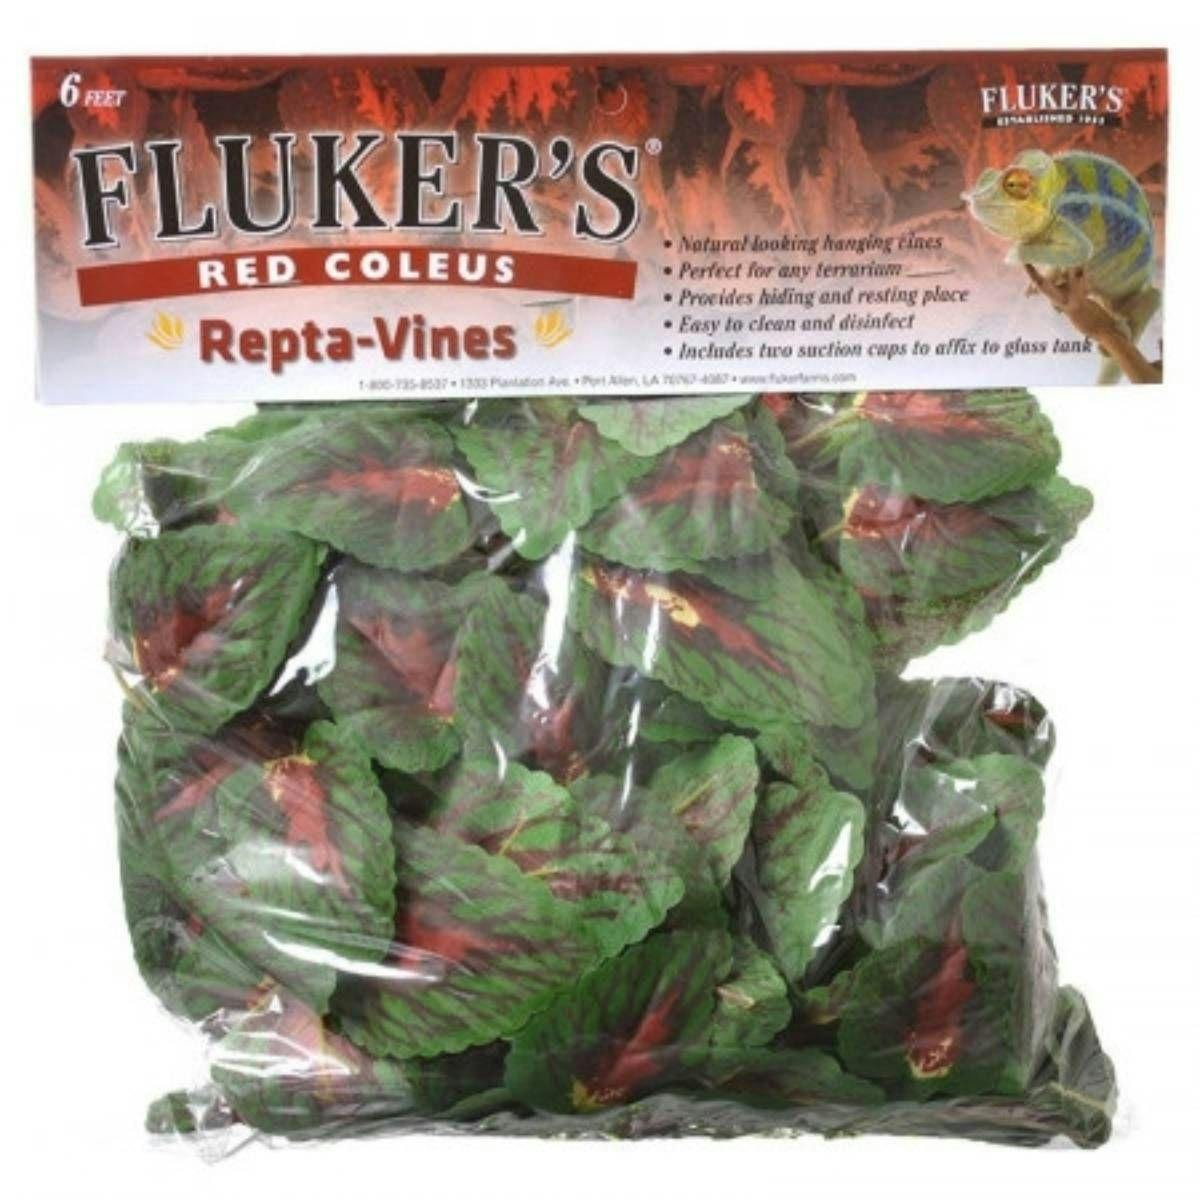 Image for Fluker's Repta-Vines Red Coleus by Josh's Frogs